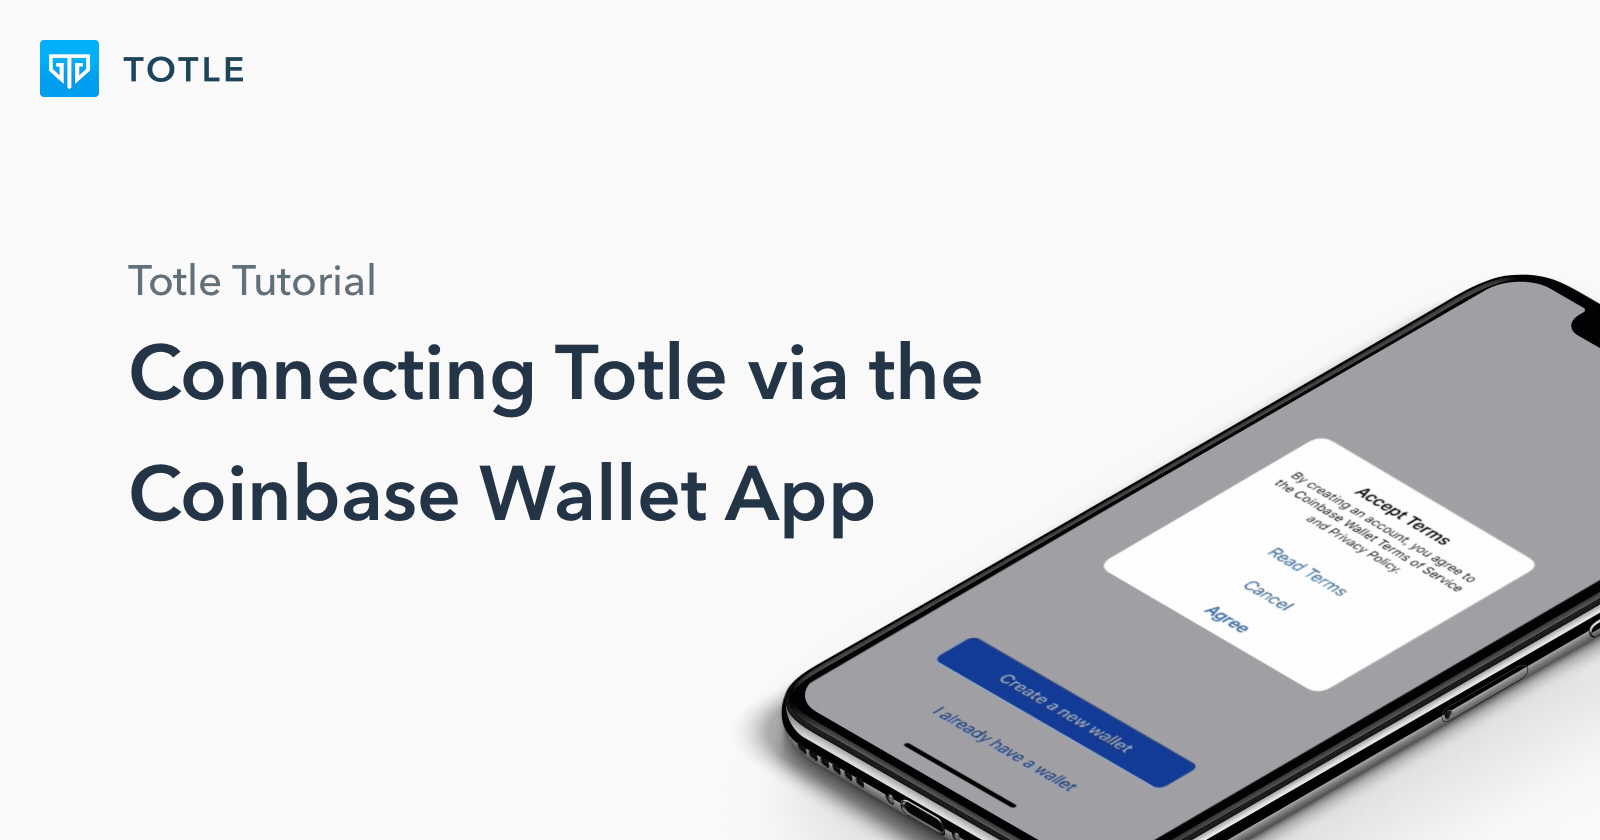 Totle Tutorial 2: Connecting Totle via the Coinbase Wallet App